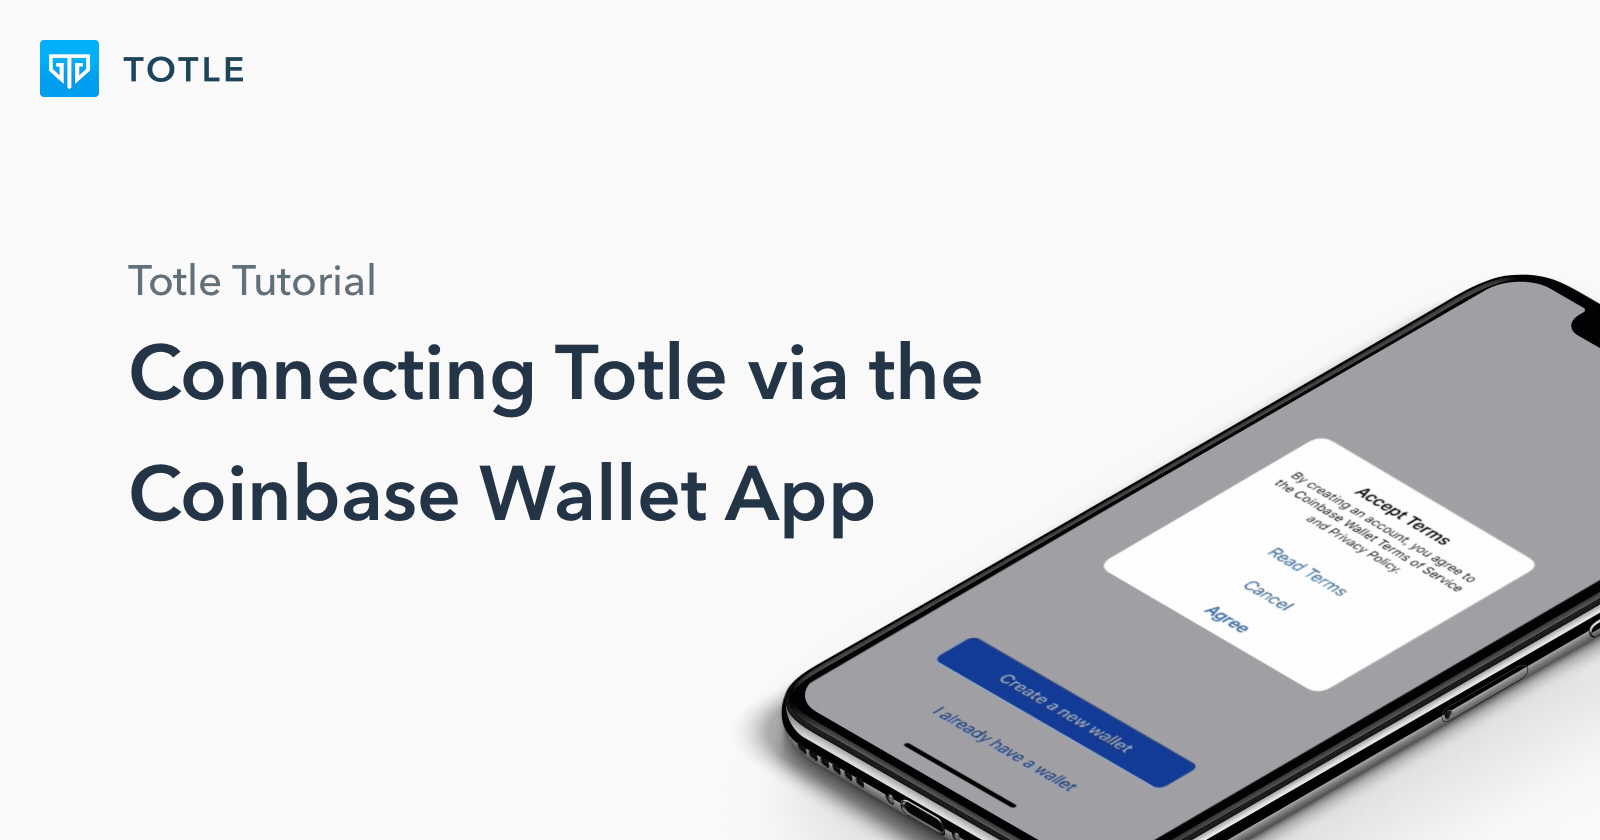 Totle Tutorial 2: Connecting Totle via the Coinbase Wallet App